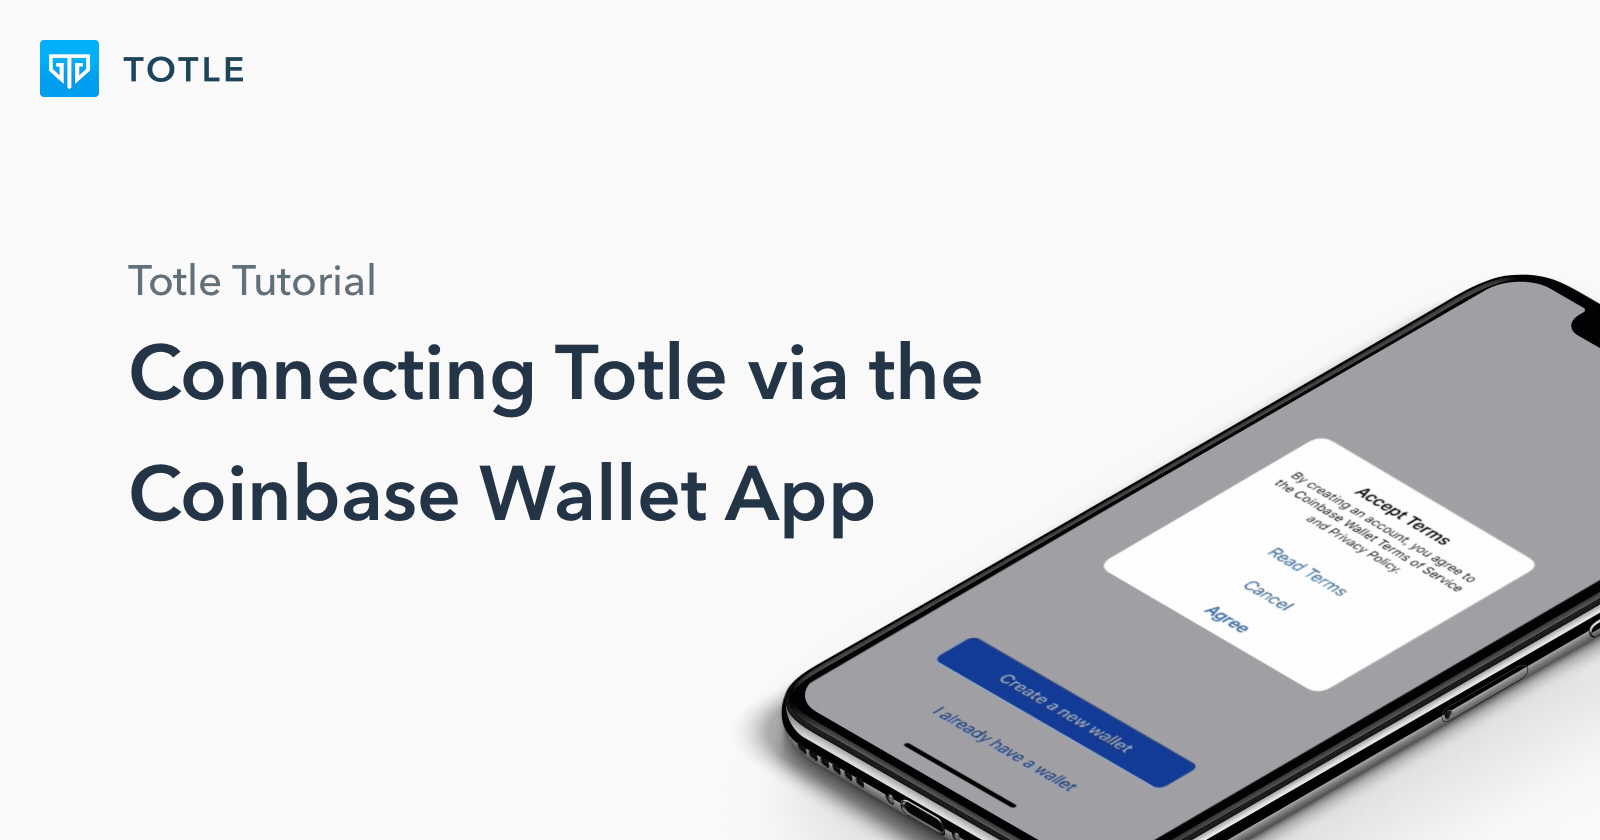 Totle Tutorial 2: Connecting Totle via the Coinbase Wallet App